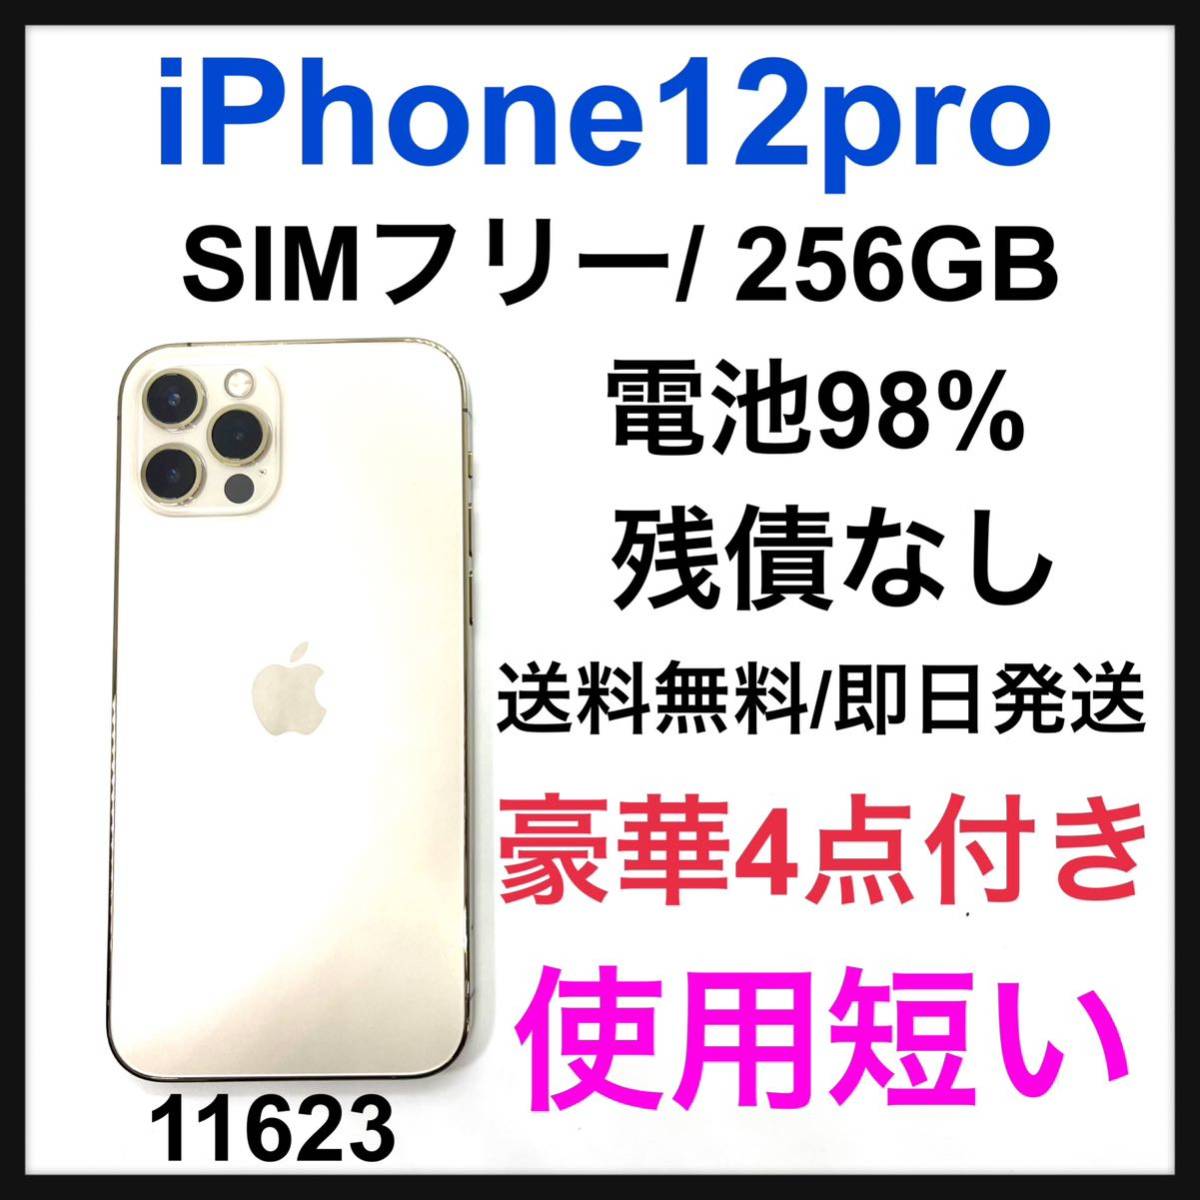 A 98% iPhone 12 pro ゴールド 256 GB SIMフリー | transparencia